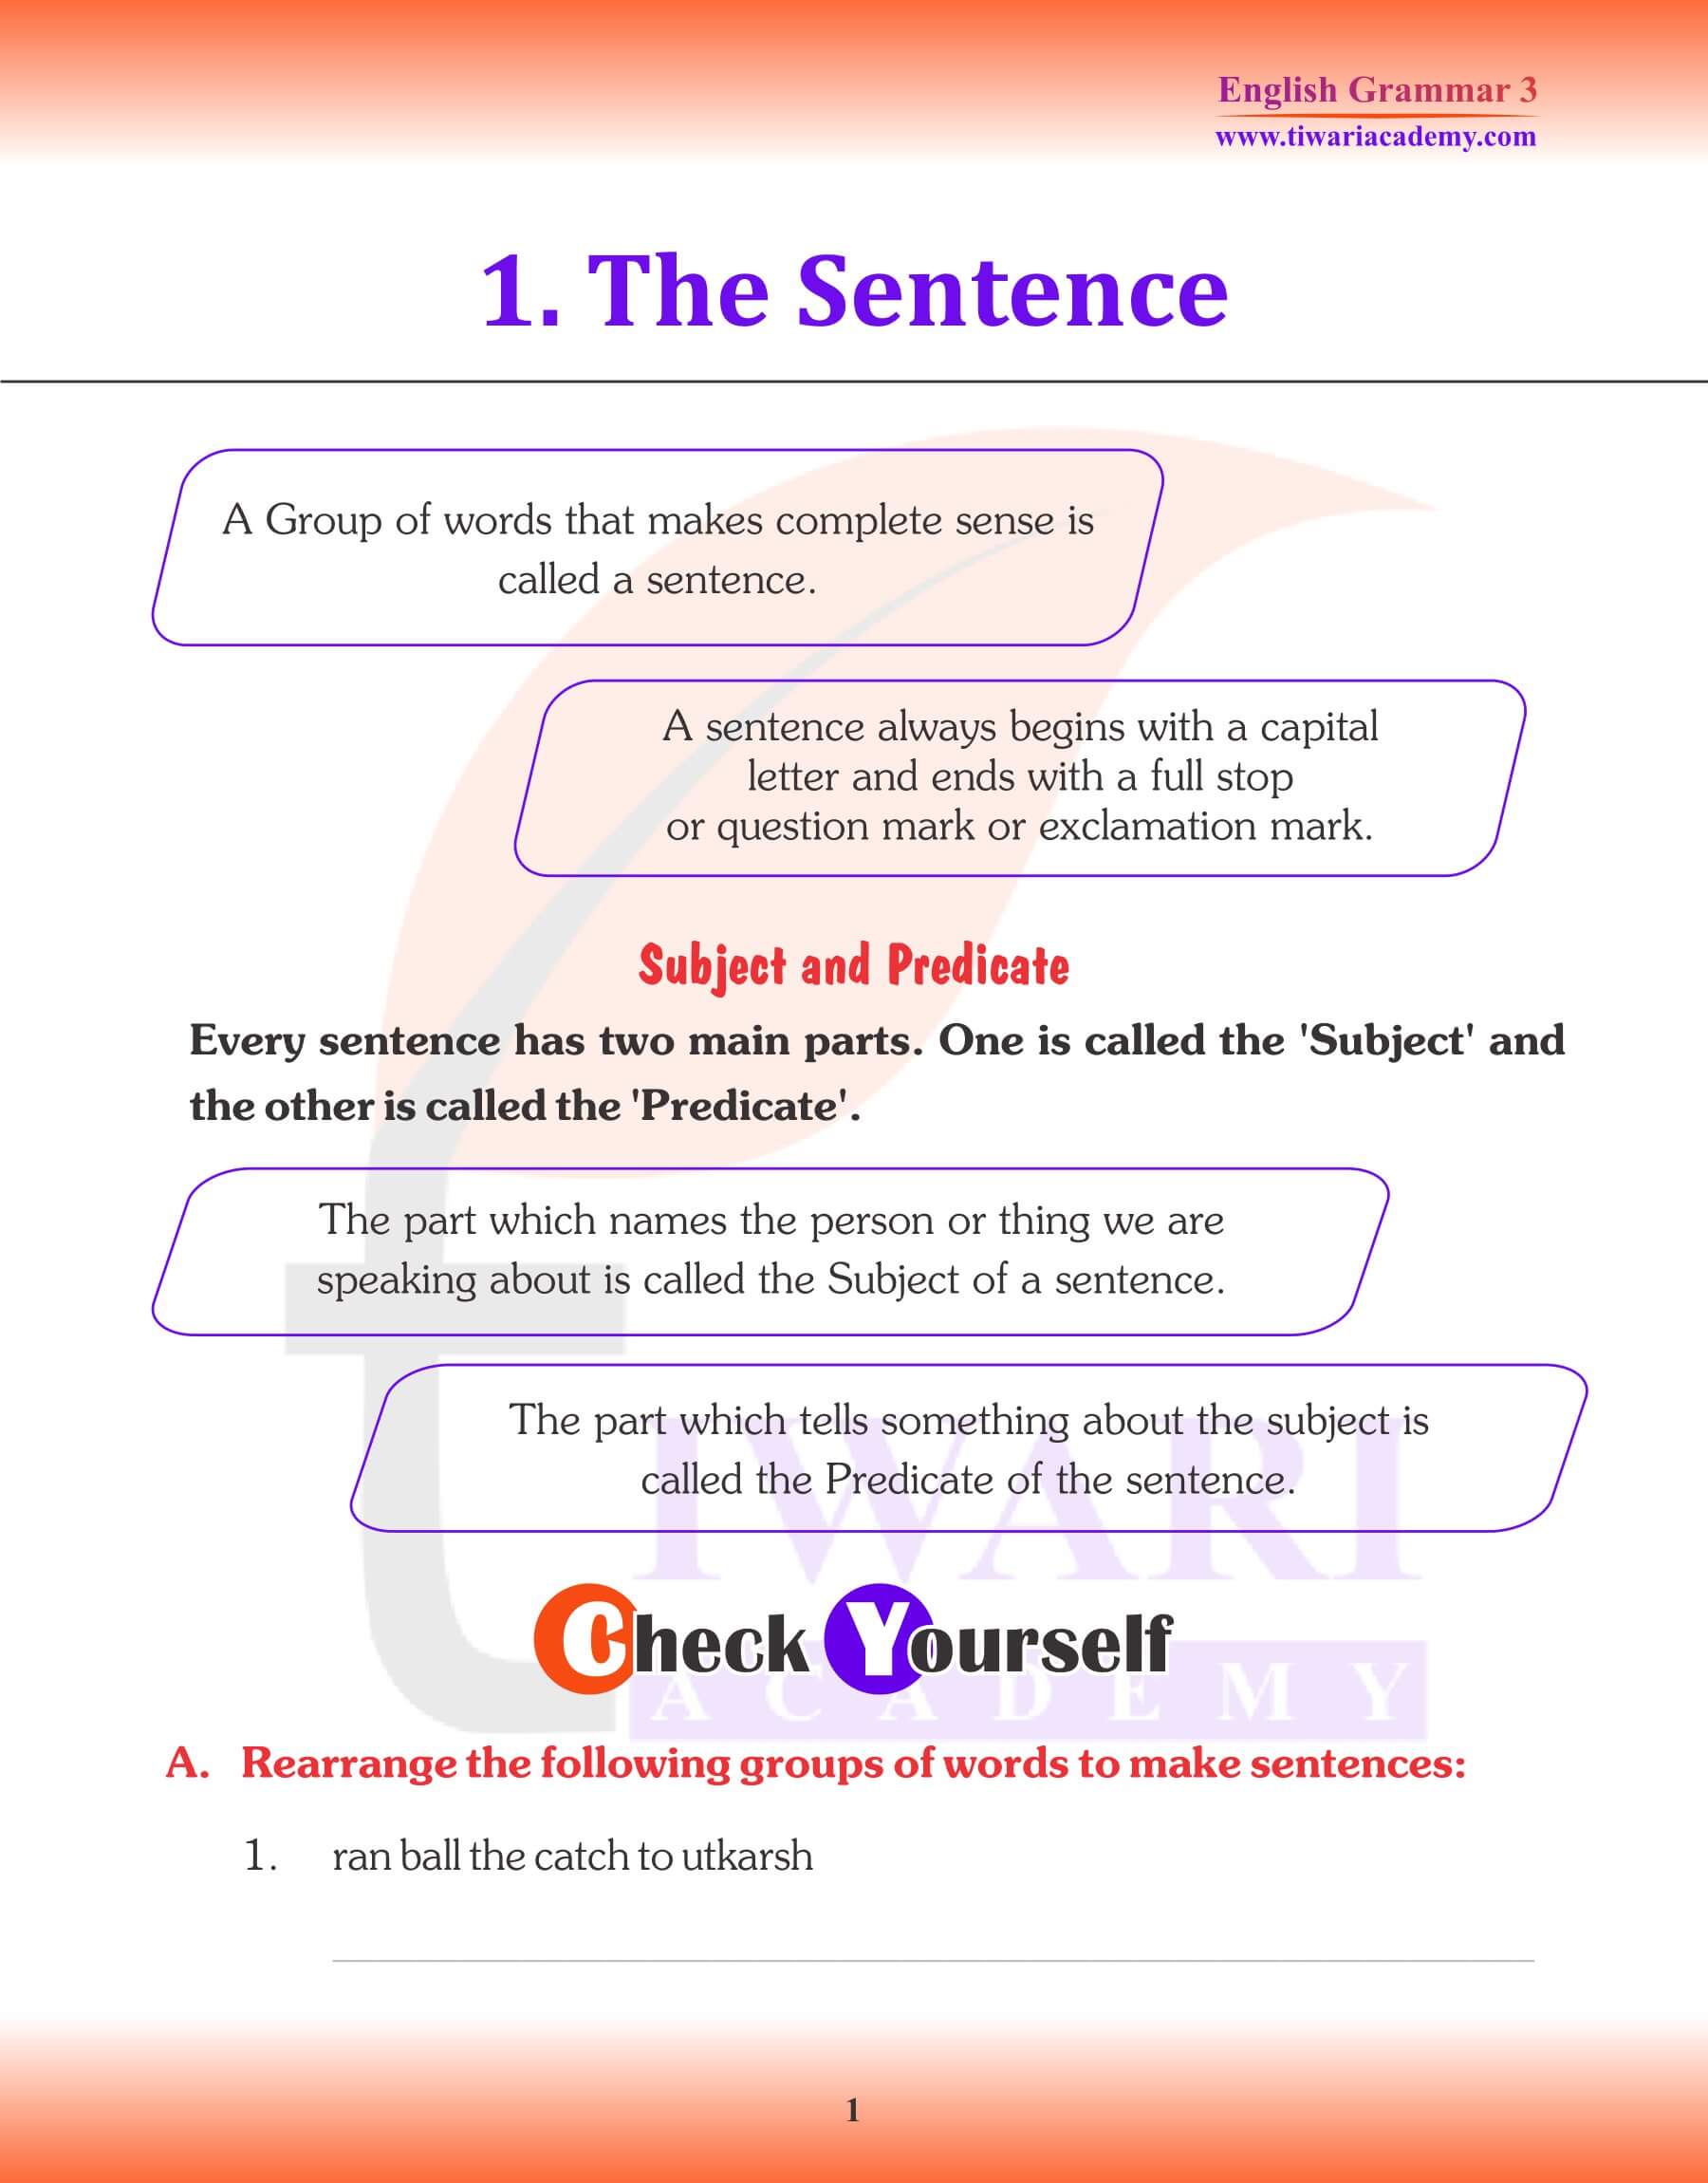 English Grammar for Grade 3 Chapter 1 The Sentence